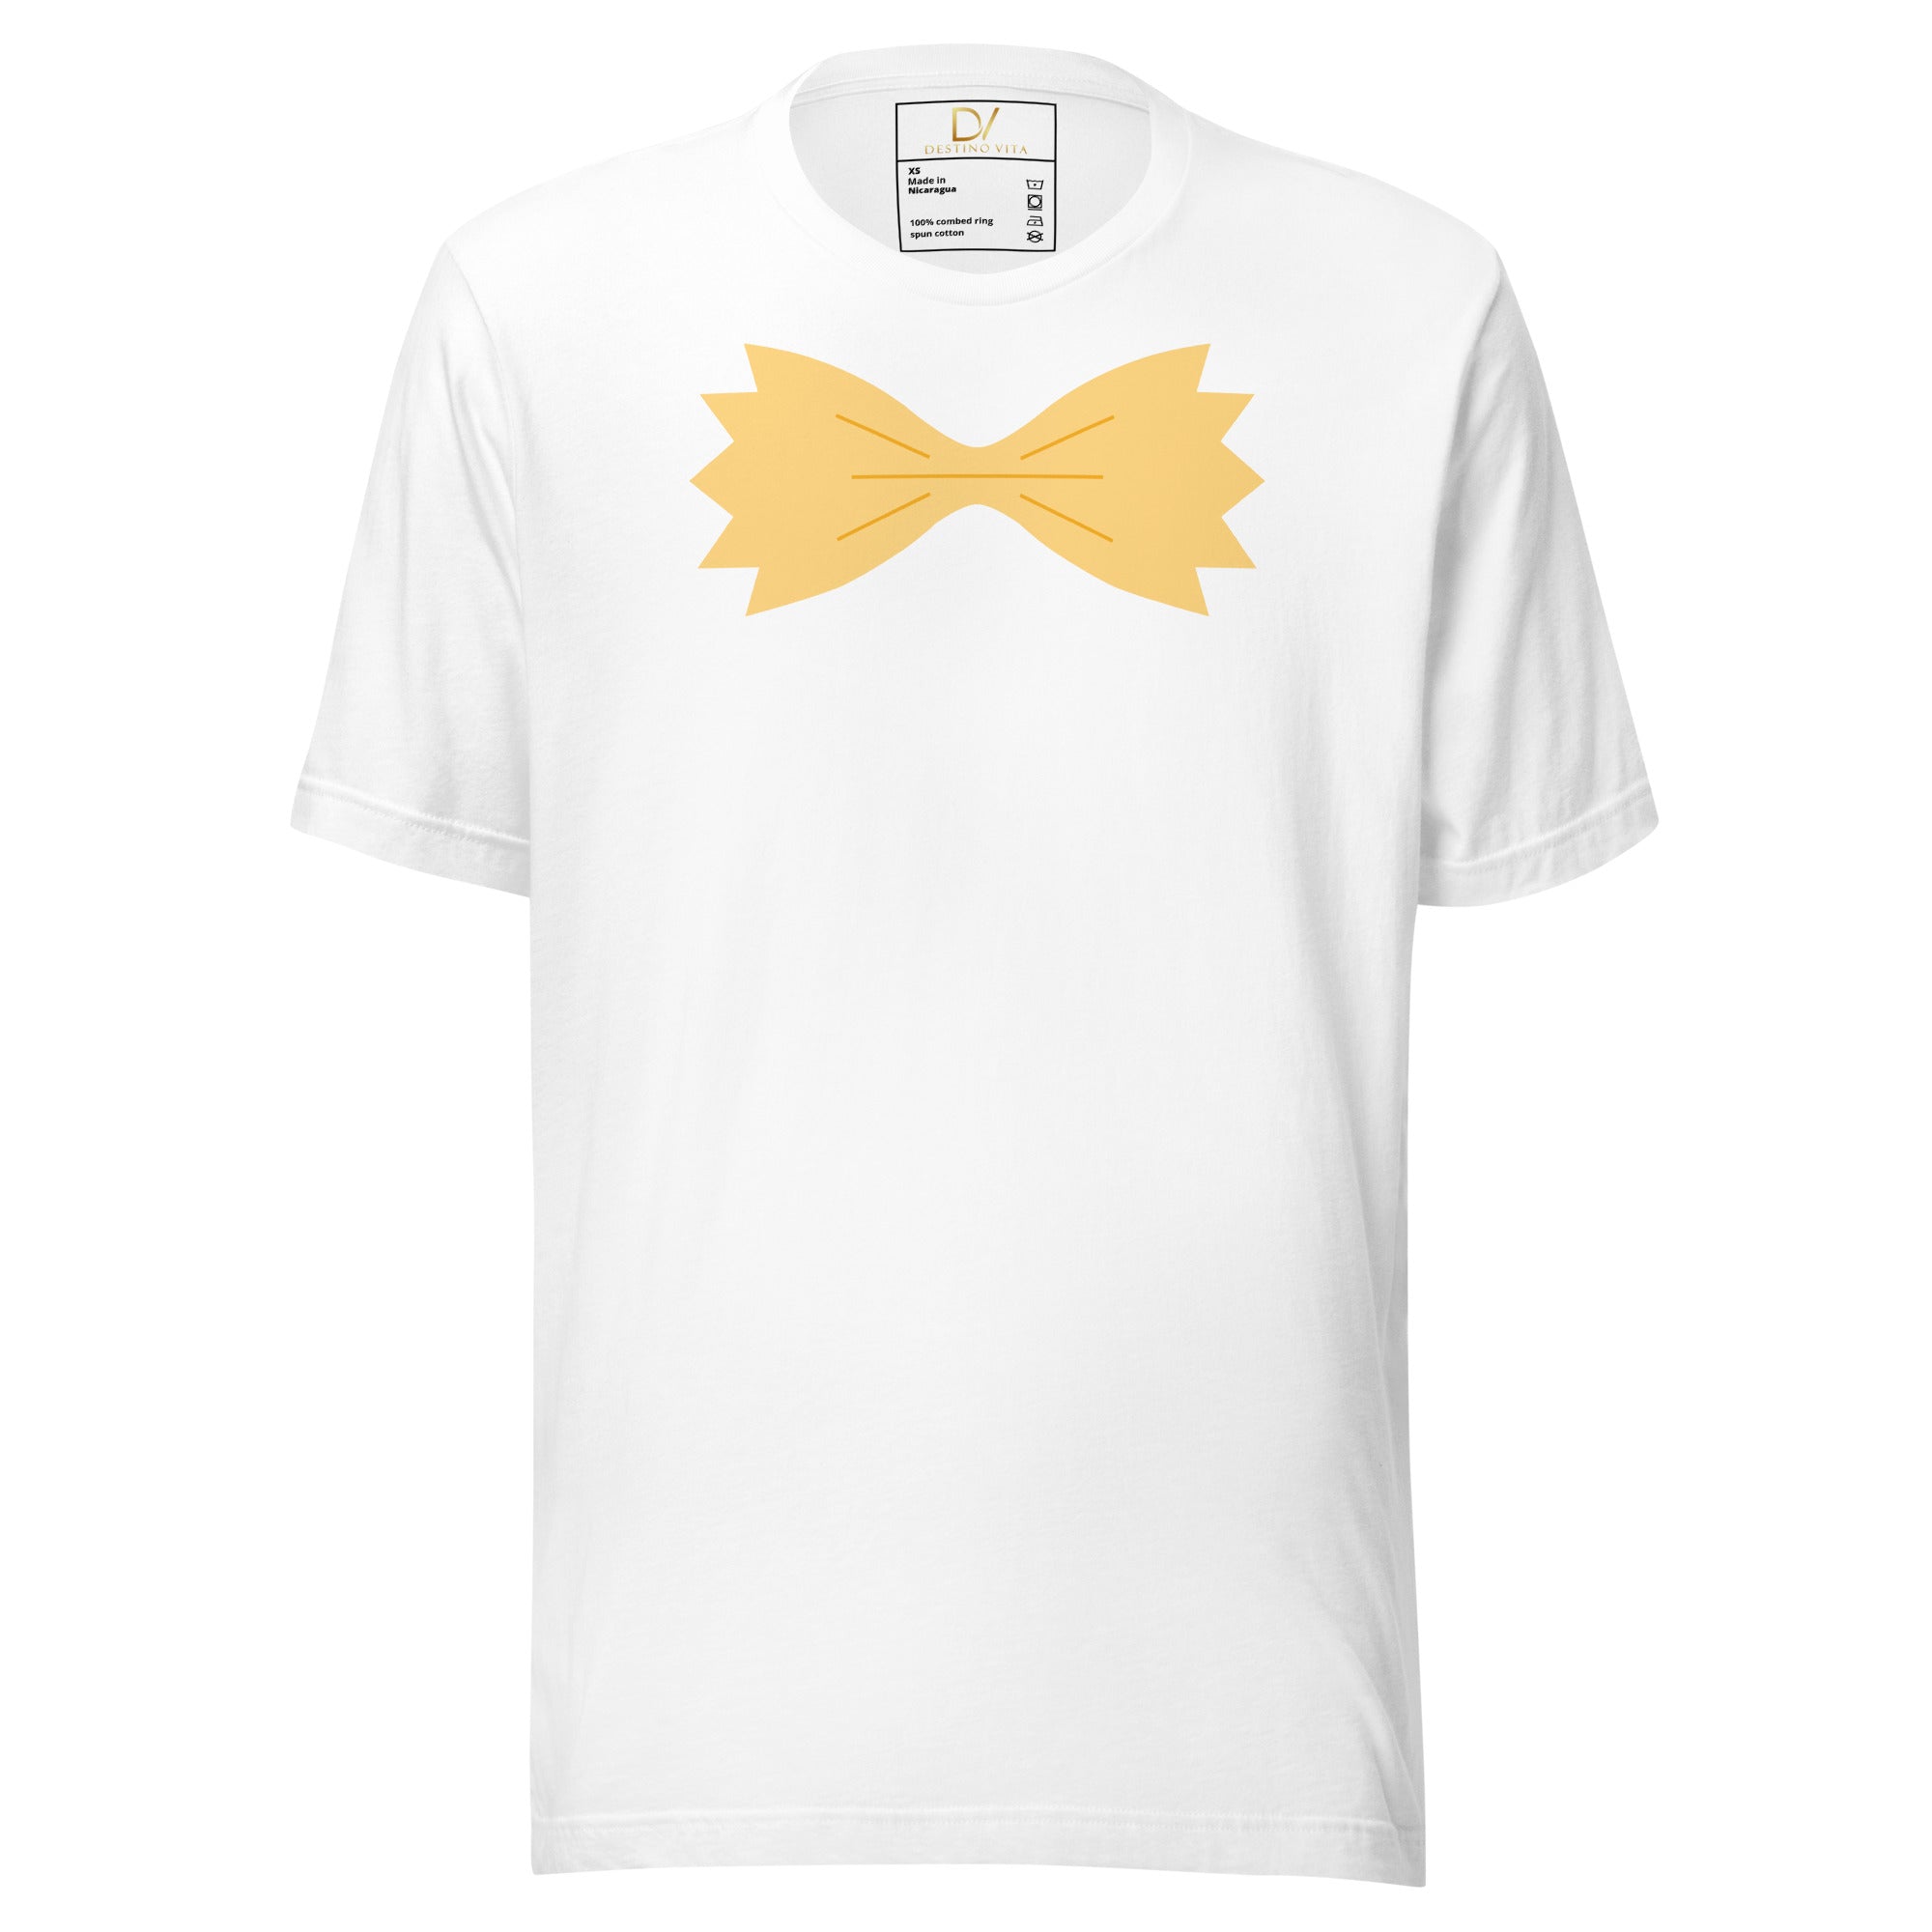 Unisex t-shirt - Pasta